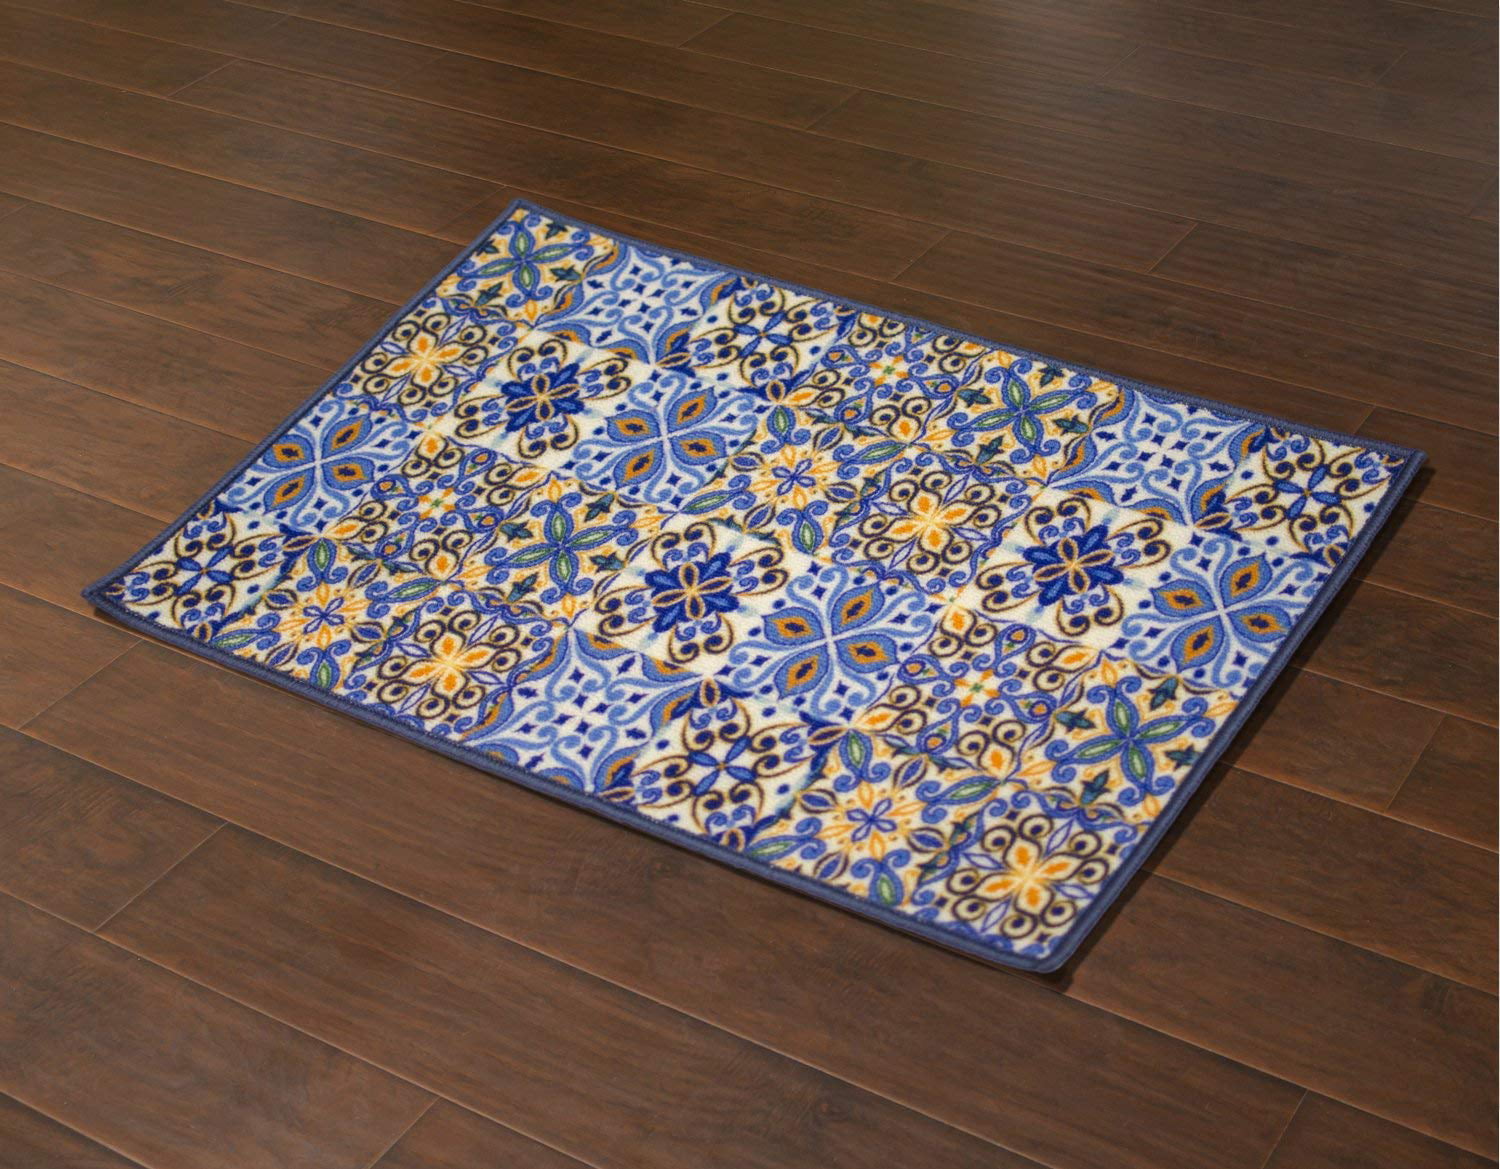 Kashi Home Printed Decor Area Rug Contemporary Printed Designs Floor Cover Mat 